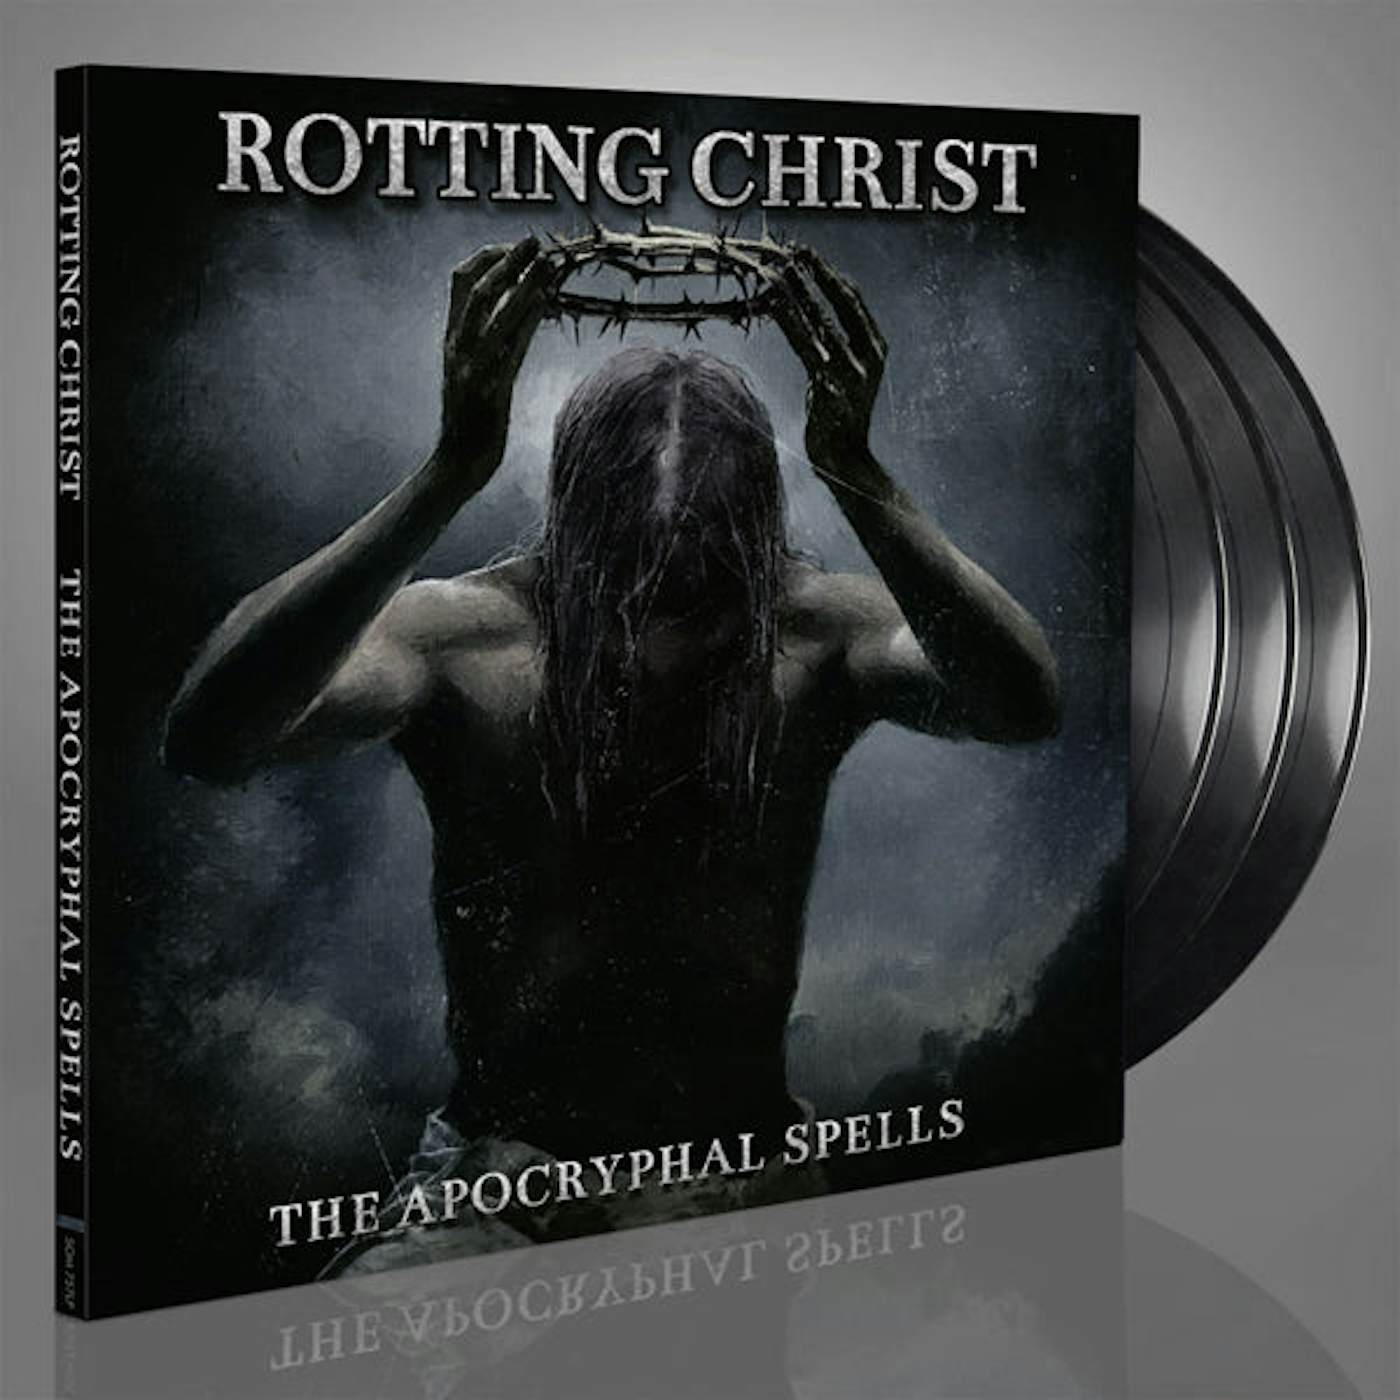 Rotting Christ LP - The Apocryphal Spells (3Lp) (Vinyl)